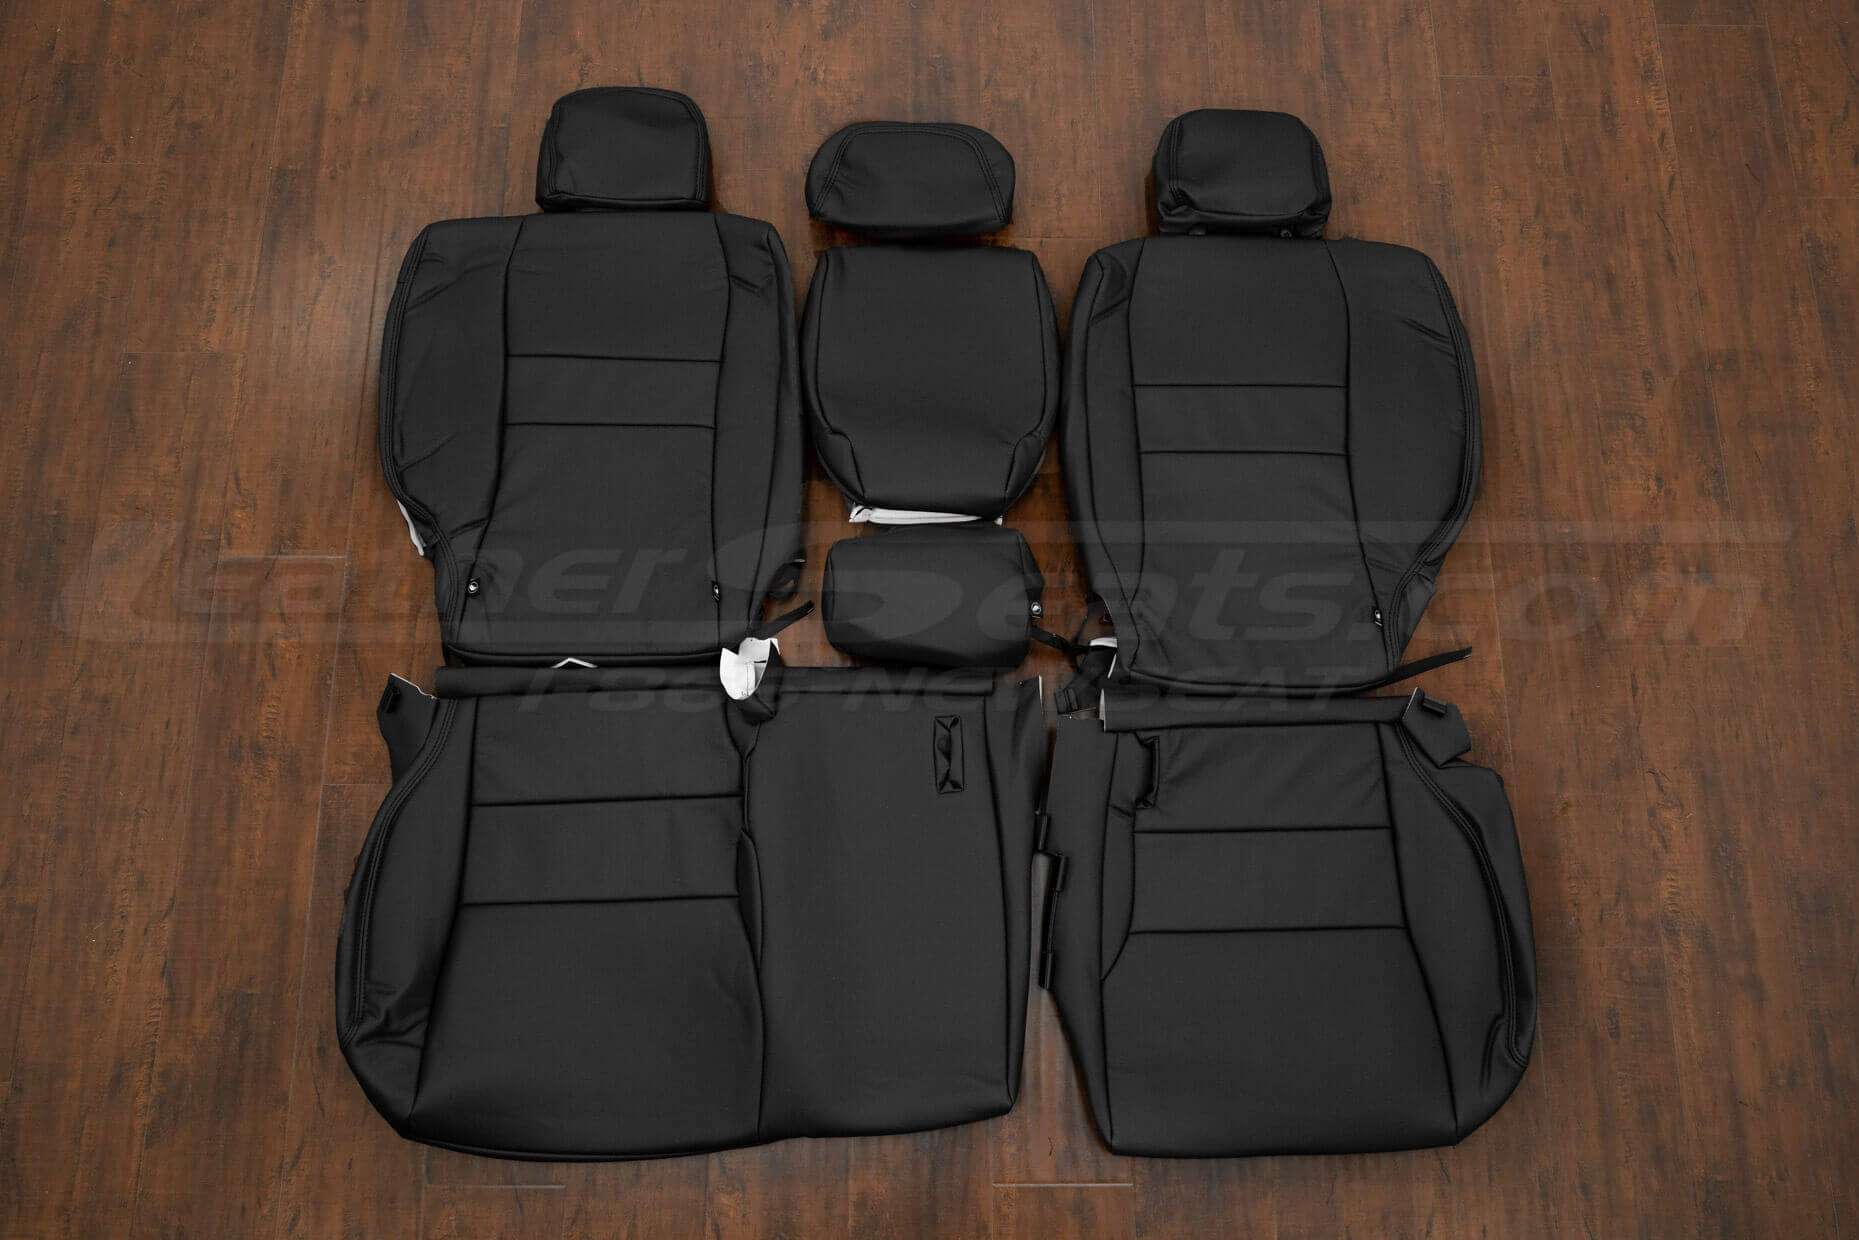 2011 Honda CR-V SUV Leather Interior Kit - Black - Rear seat upholstery with Armrest